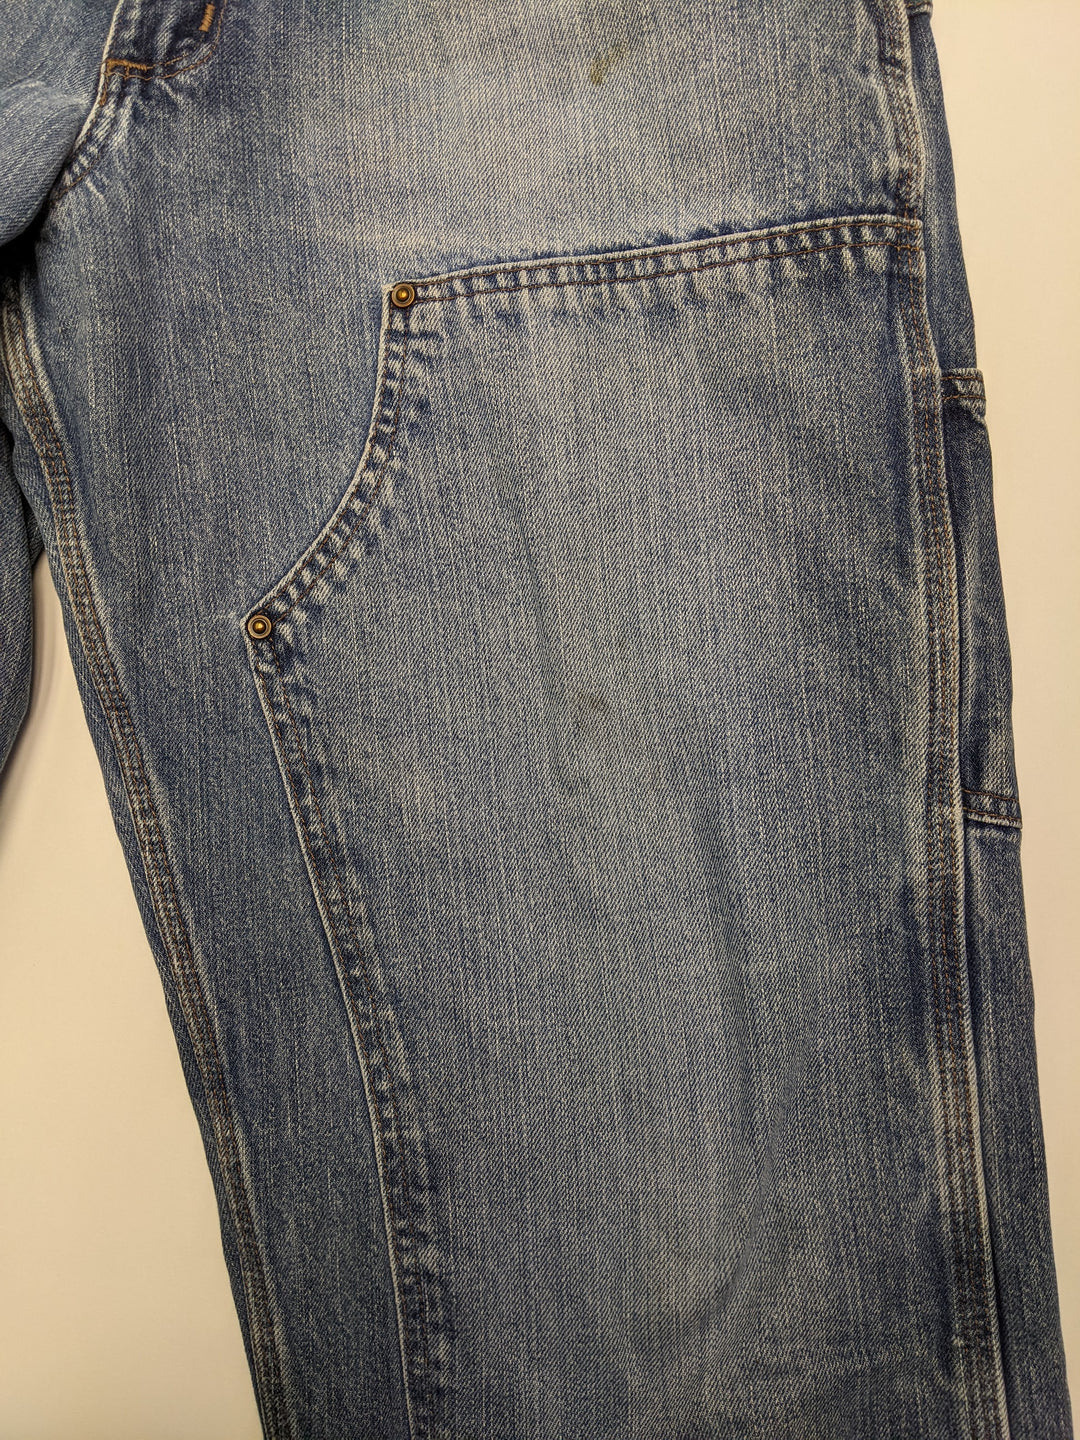 Carhartt Jeans 1 pc 1 lb B0202214-05 - Raghouse